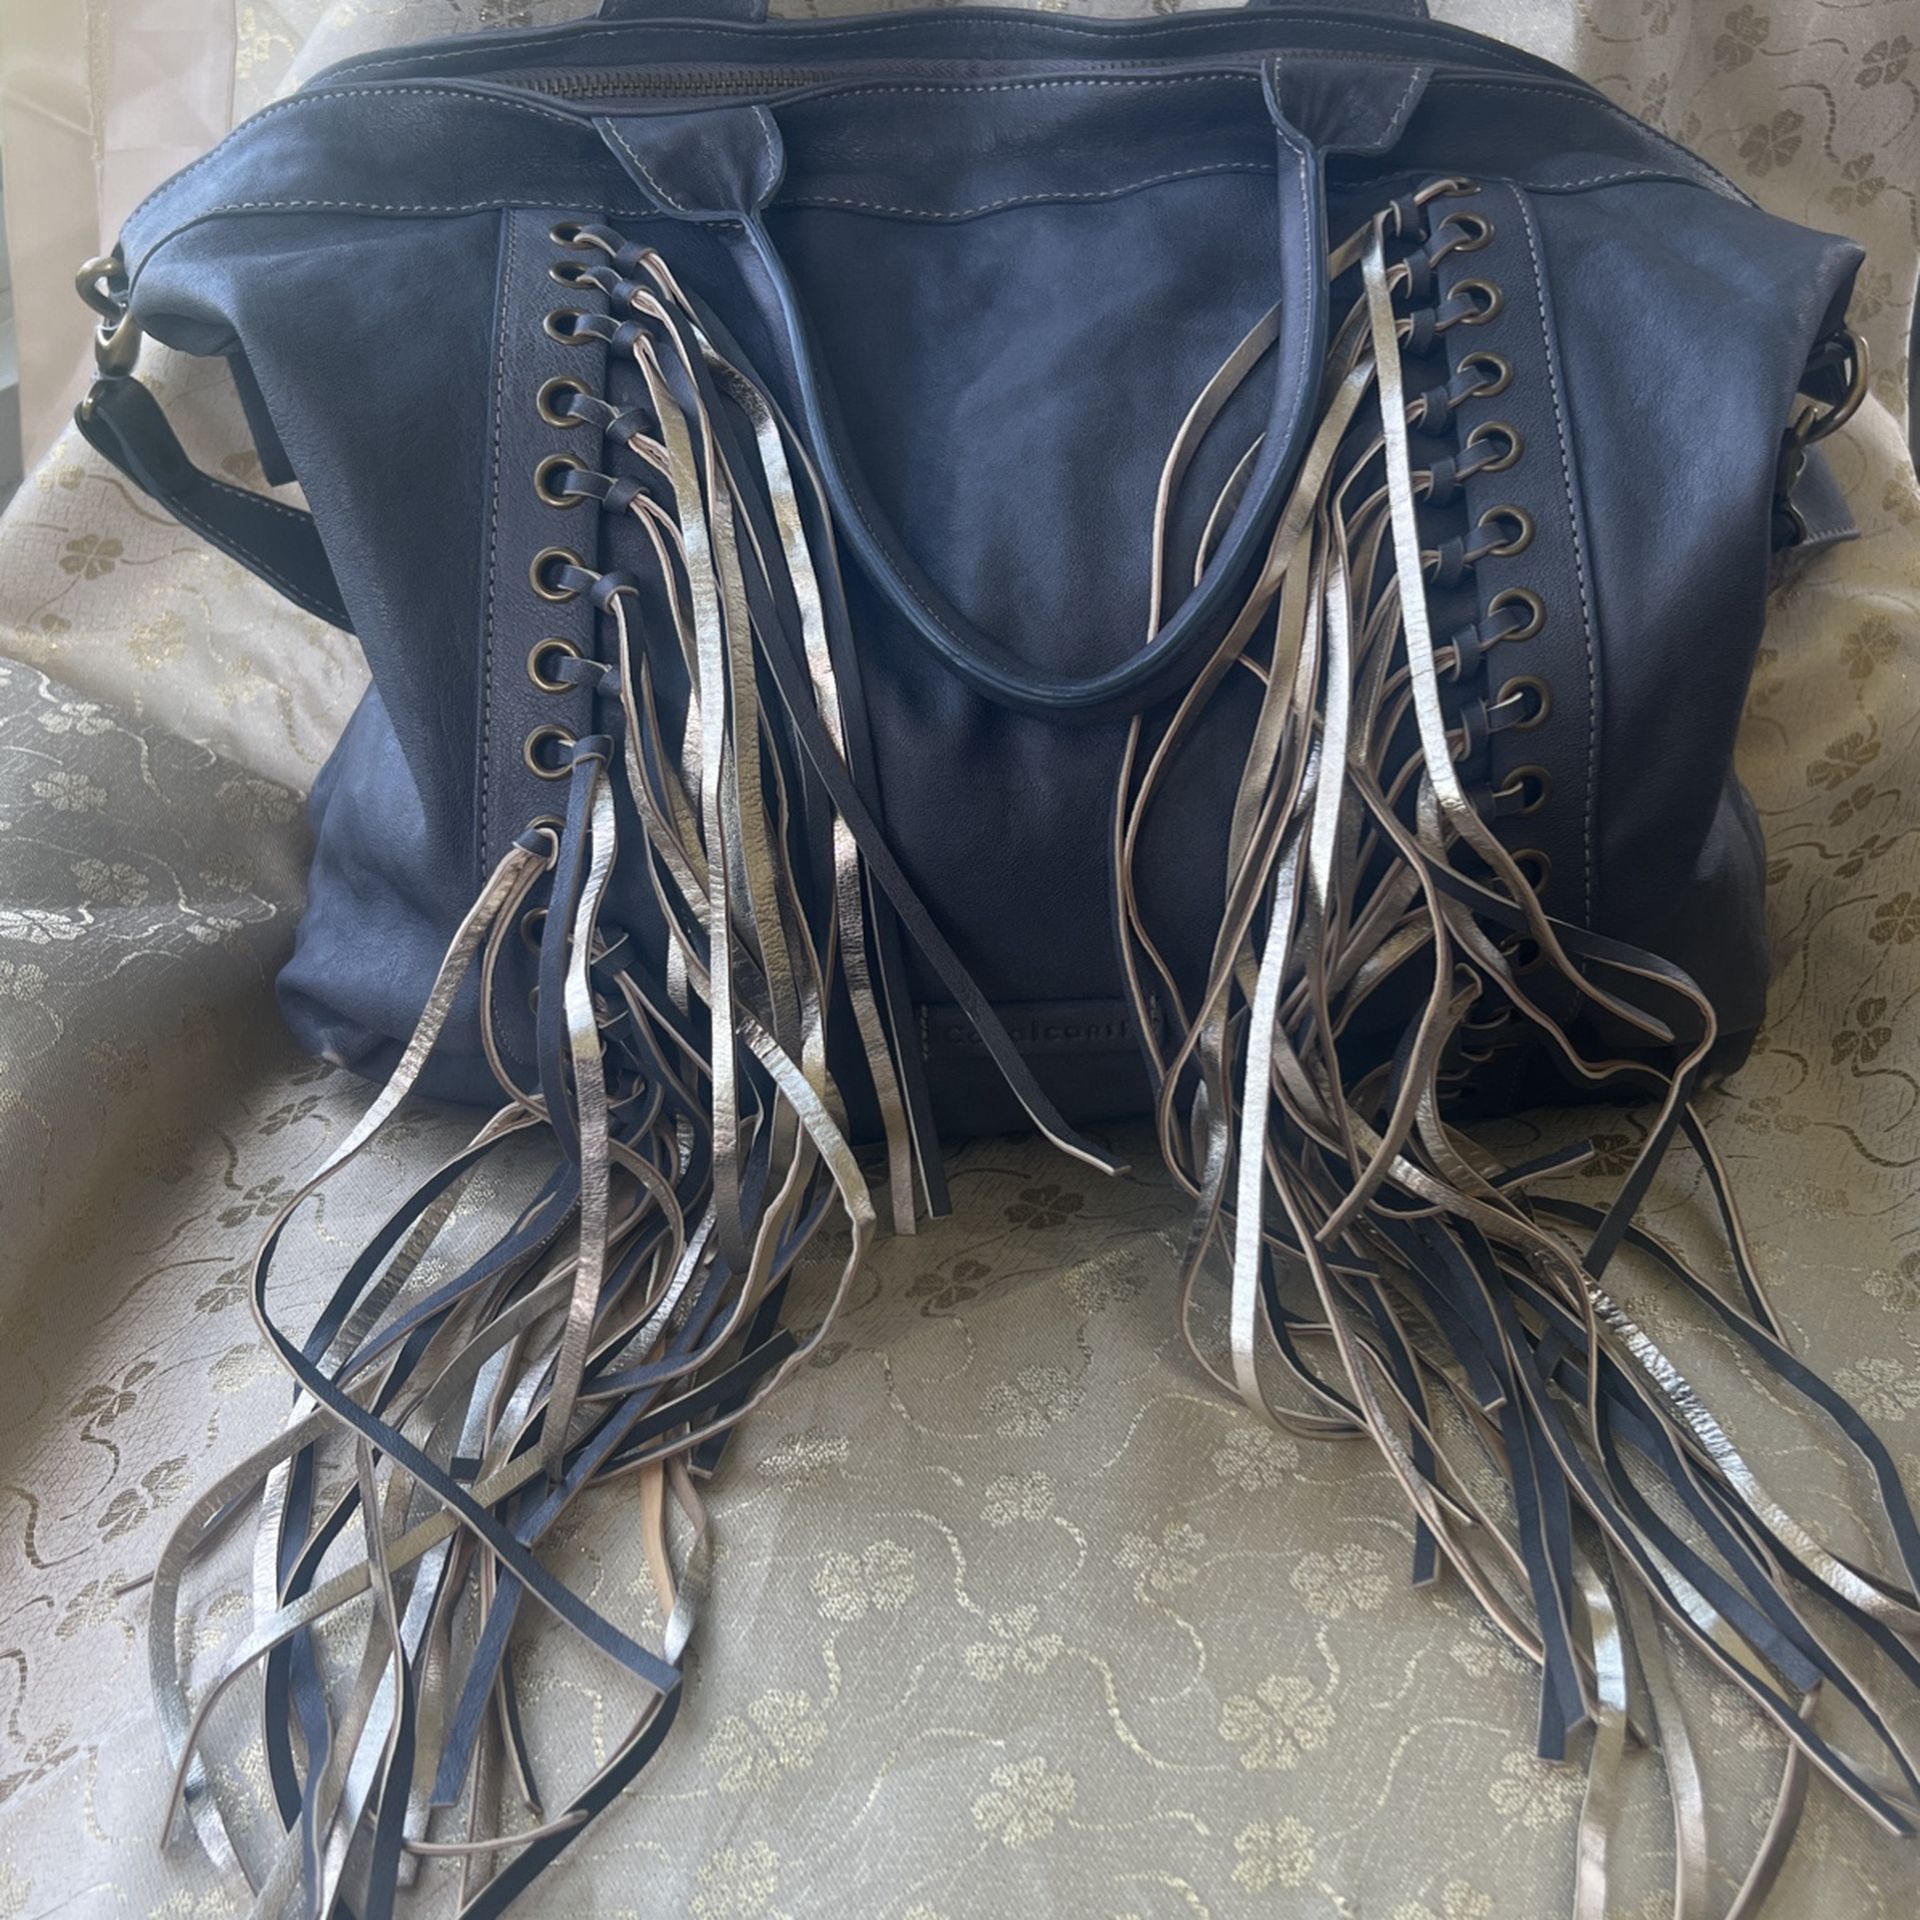 XL Cavalcanti Grey Leather Bag For Women Italian Bag Good Condition